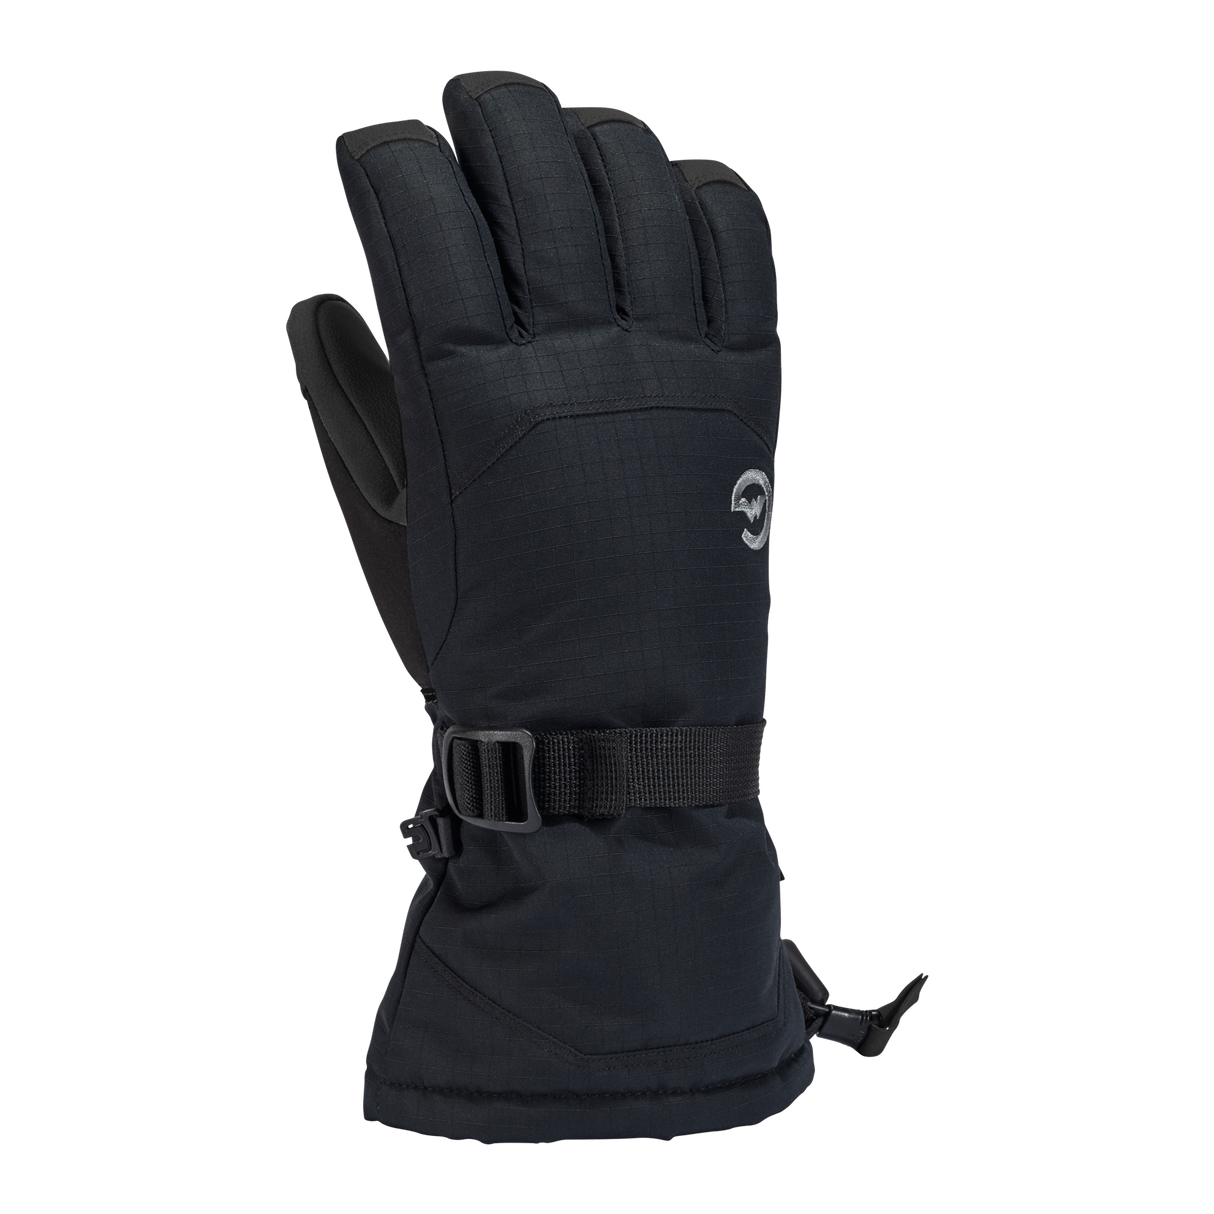 Gordini Mens Foundation Gloves  -  Small / Black